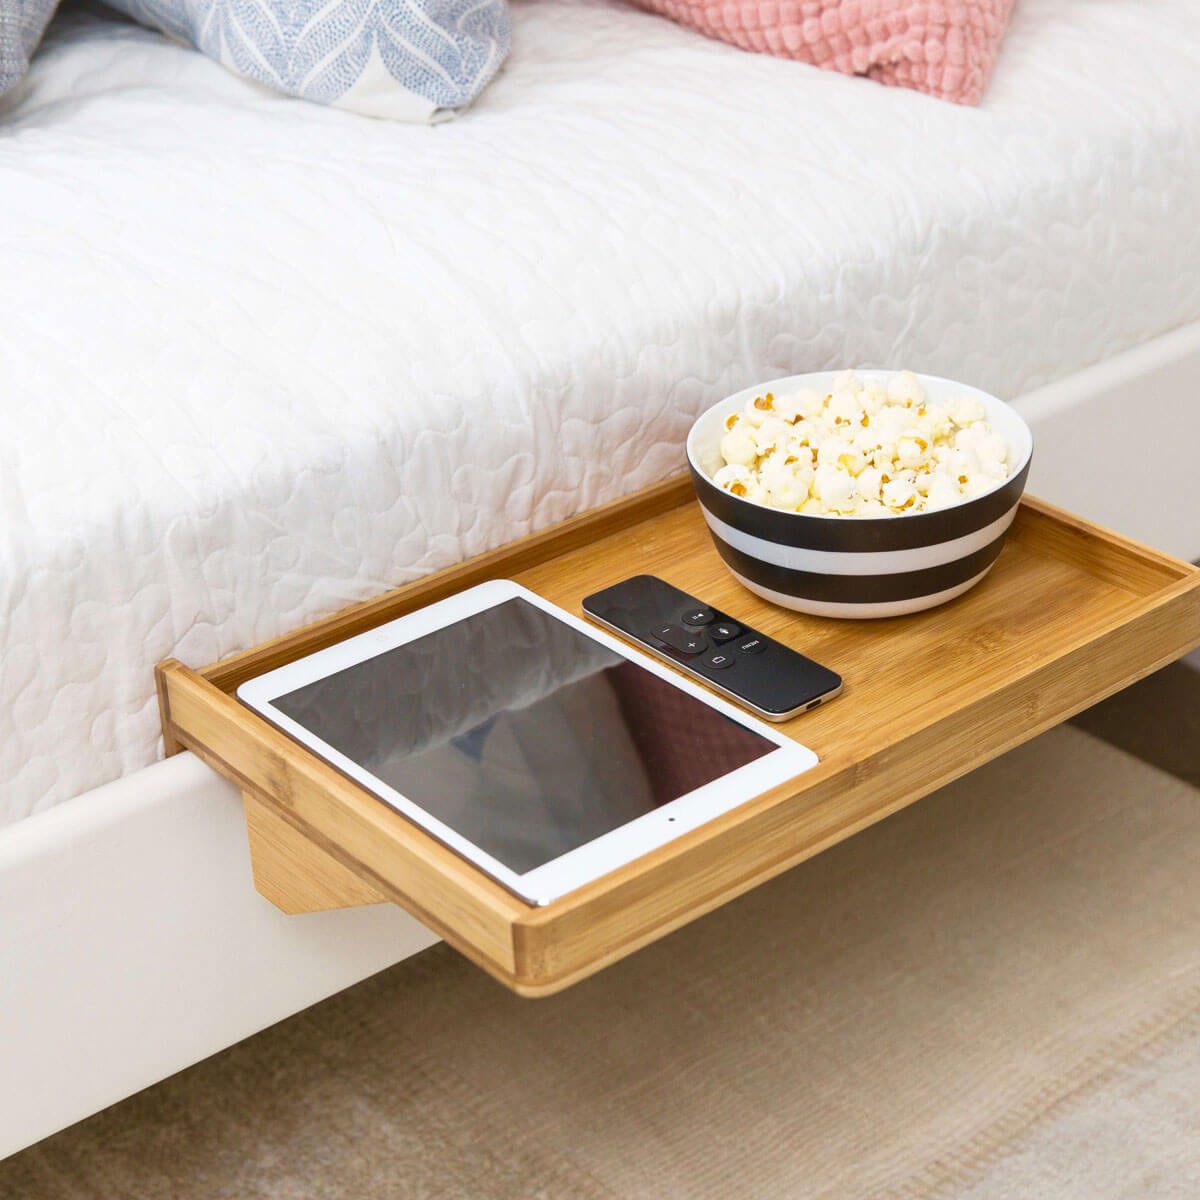 12 Ingenious Bedroom Furniture Ideas — The Family Handyman